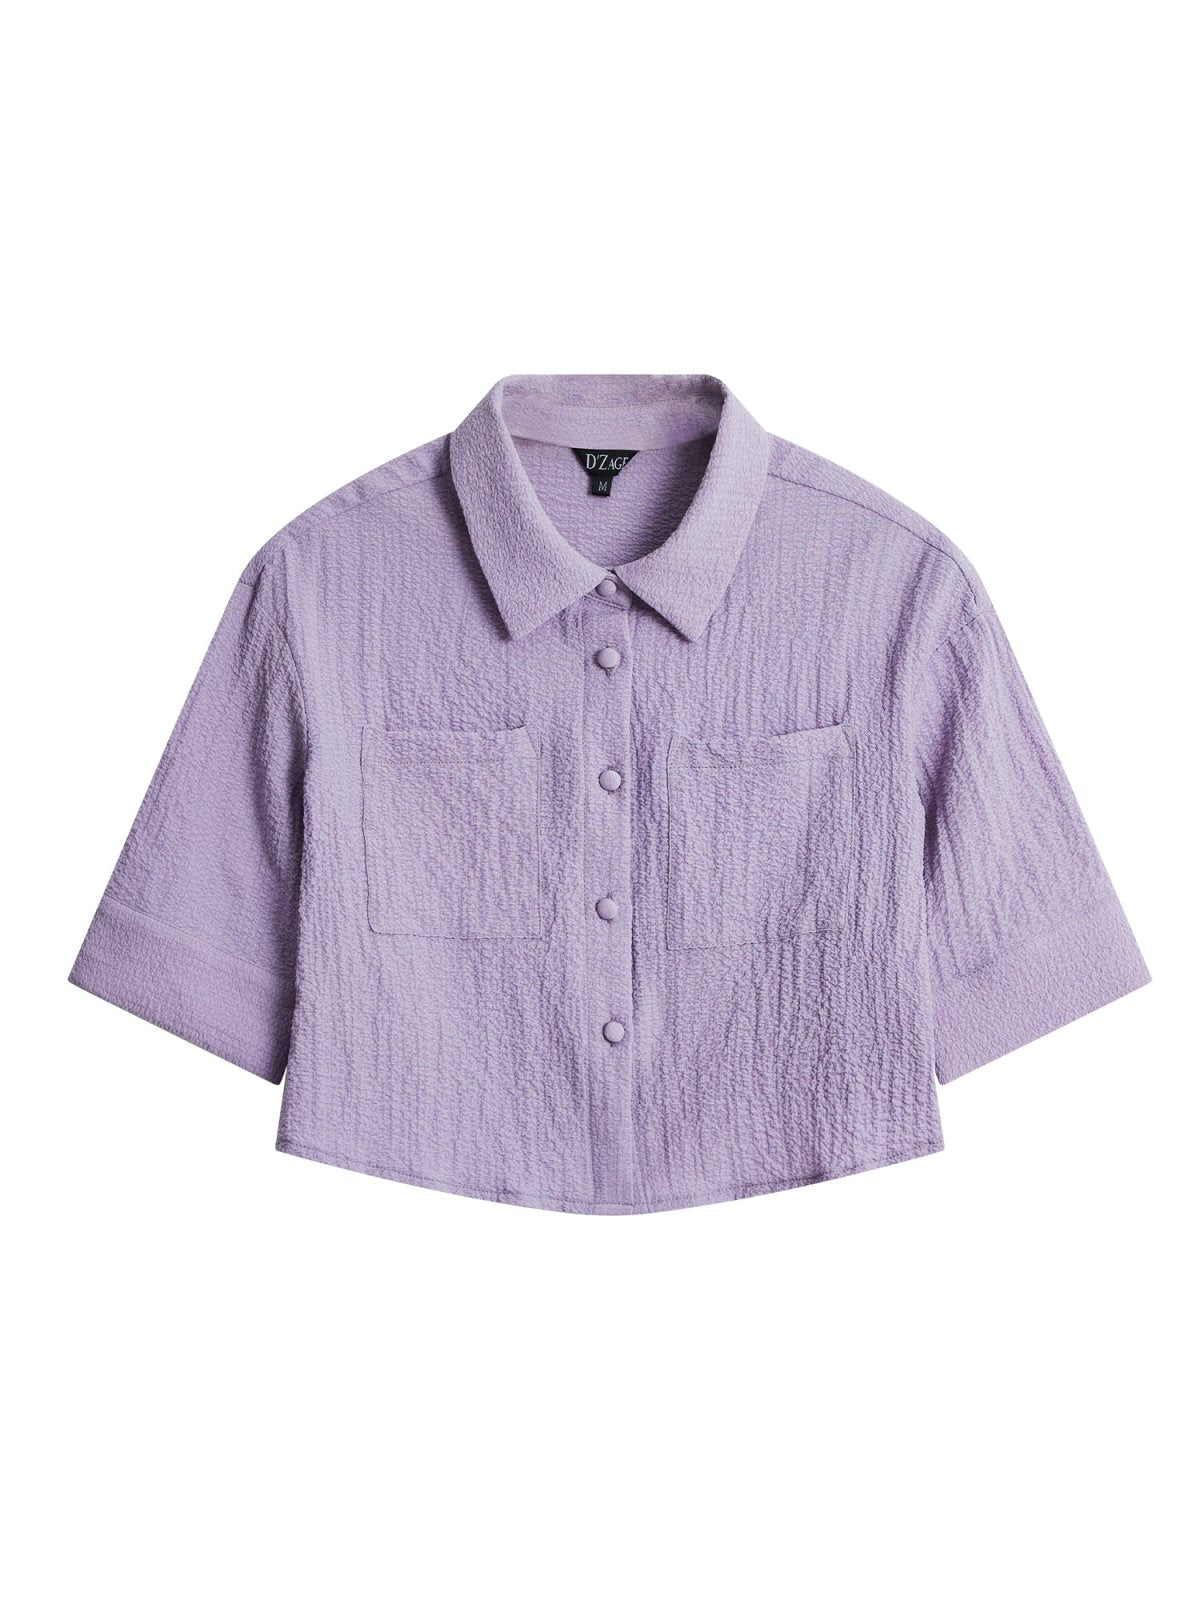 Patch Pocket Cropped Shirt DUSTY LILAC - DAG-DD8662-21DustyLilacS - Purple - S - D'ZAGE Designs